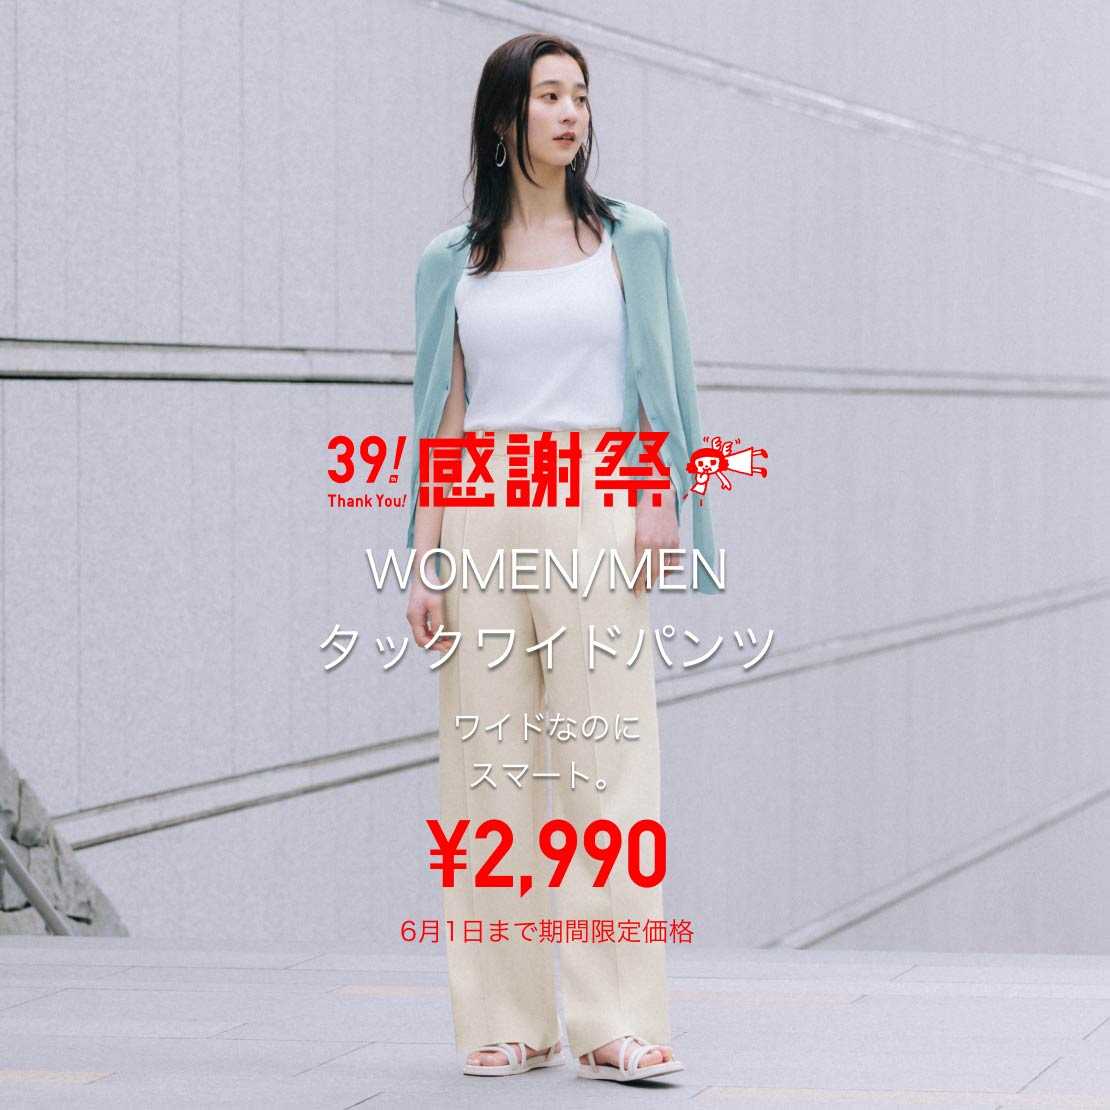 WOMEN/MEN タックワイドパンツ ¥2,990 6月1日まで期間限定価格